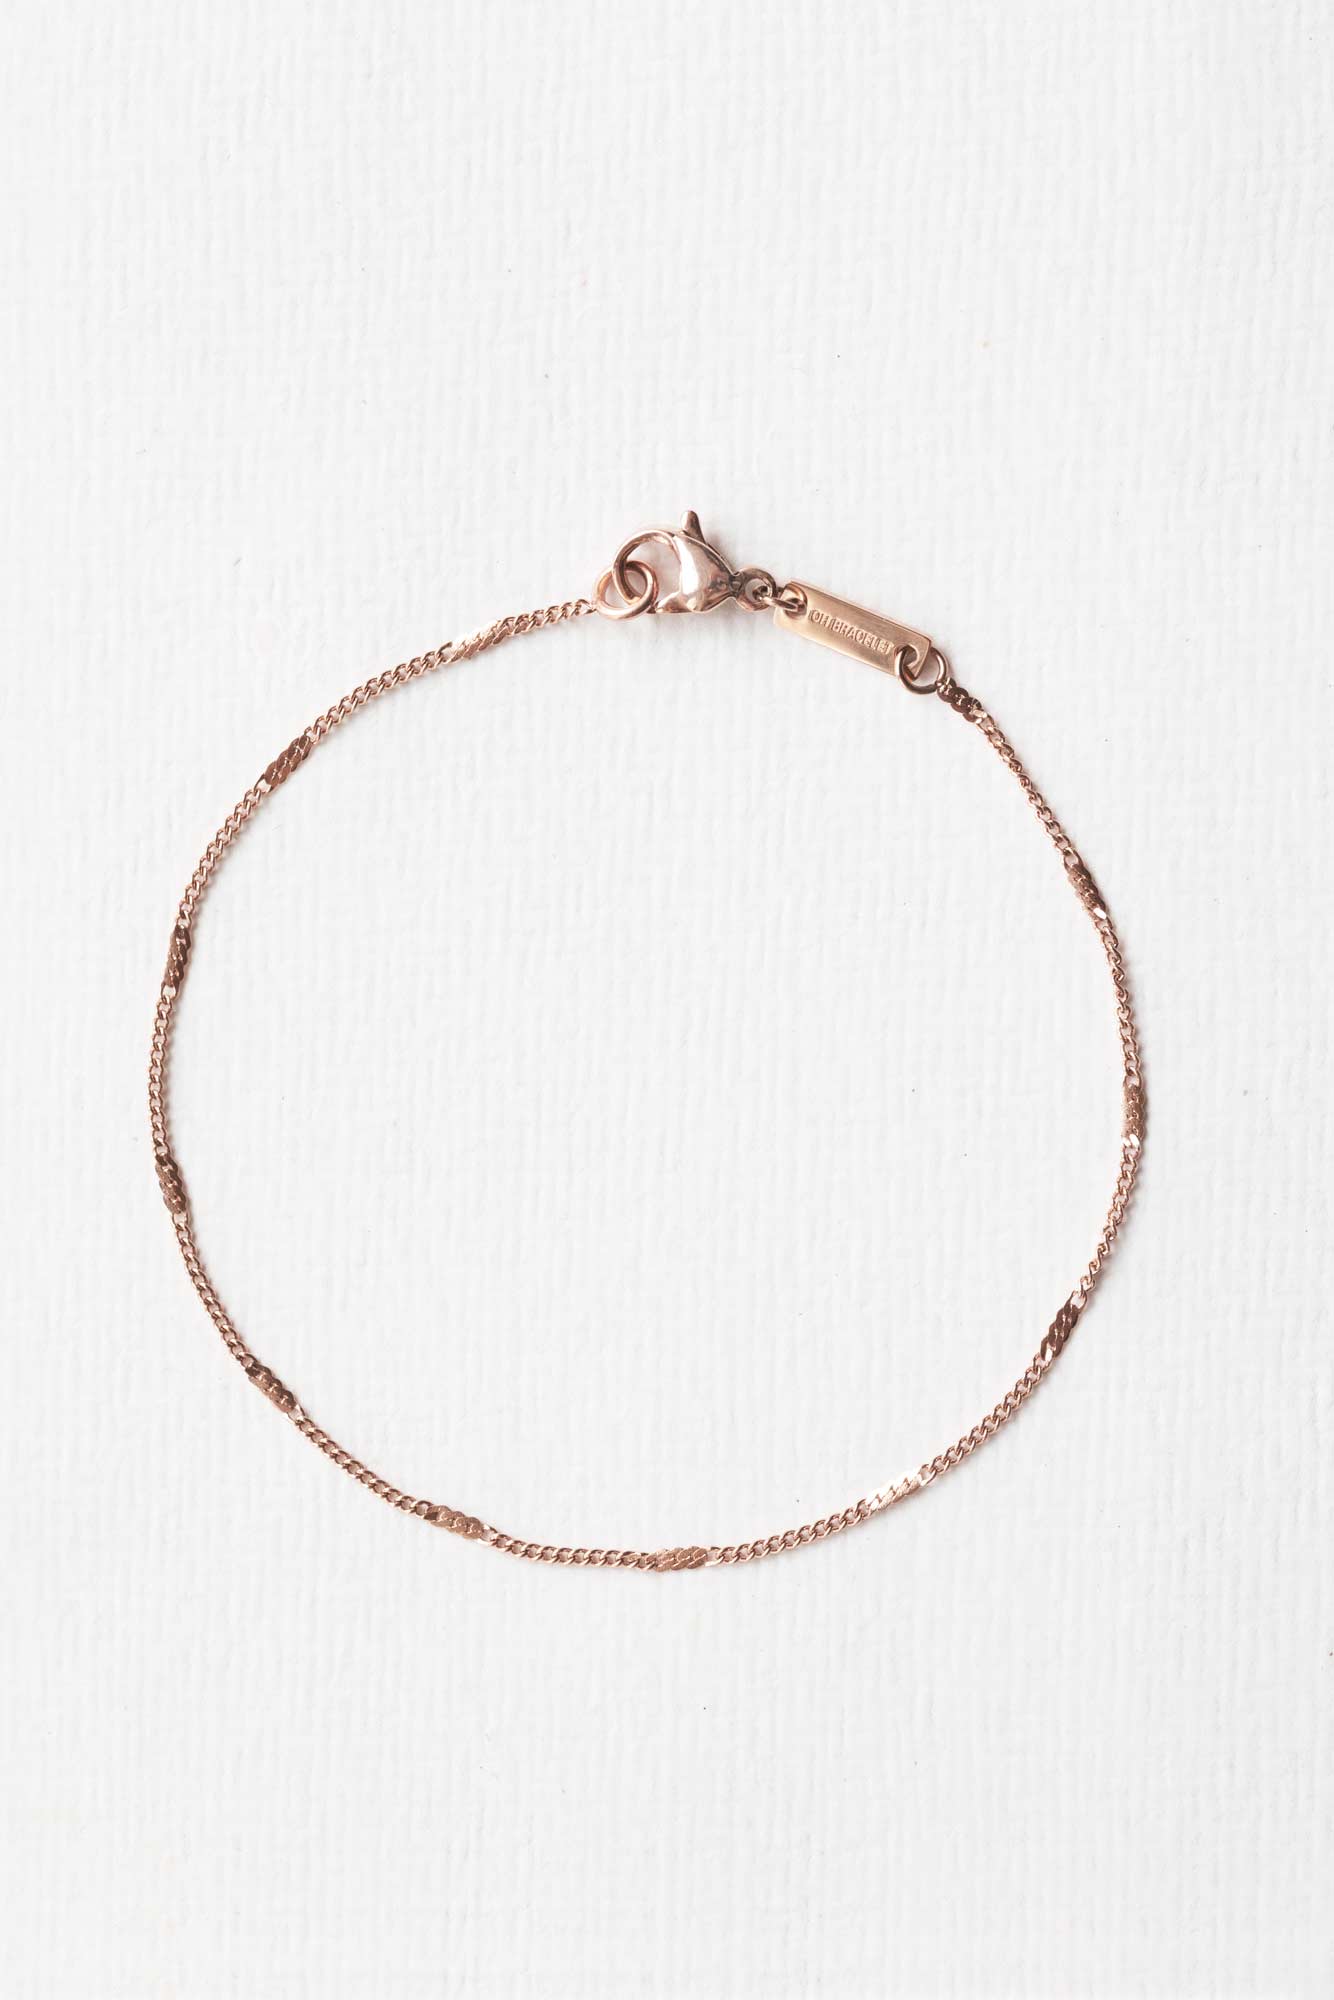 Filigranes hochwertiges Armband in Rosegold von Oh Bracelet Berlin bestehend aus recyceltem Edelstahl